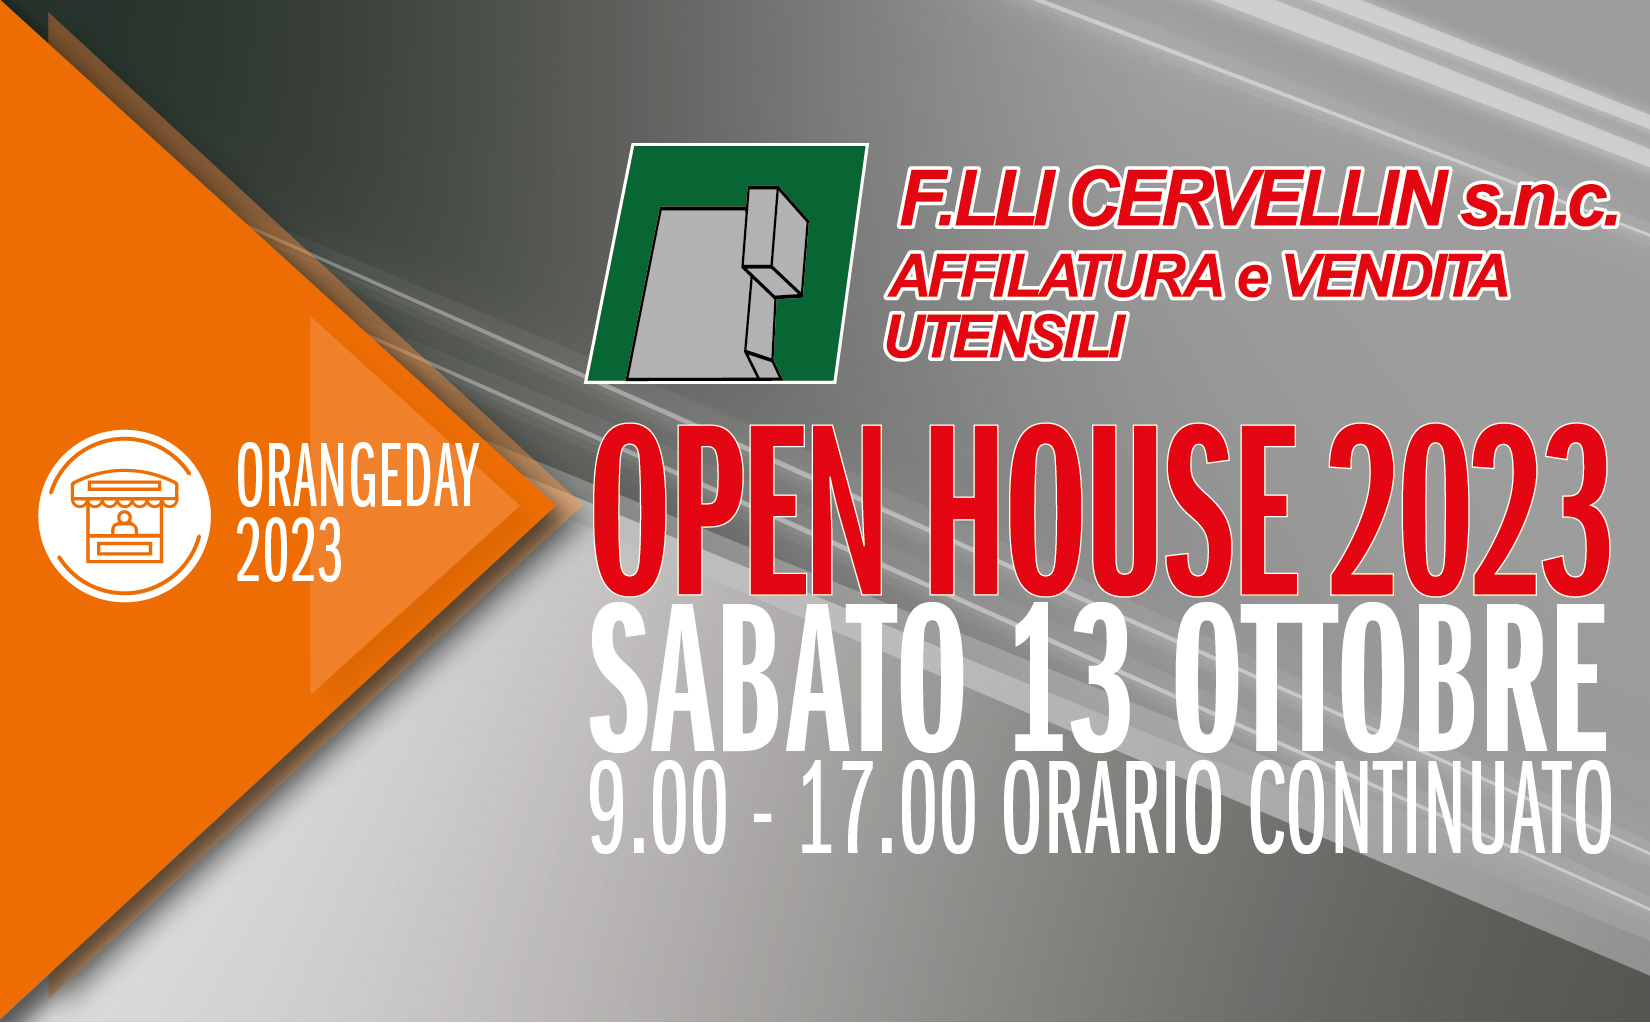 Open Day F.lli Cervellin s.n.c. 13 Ottobre